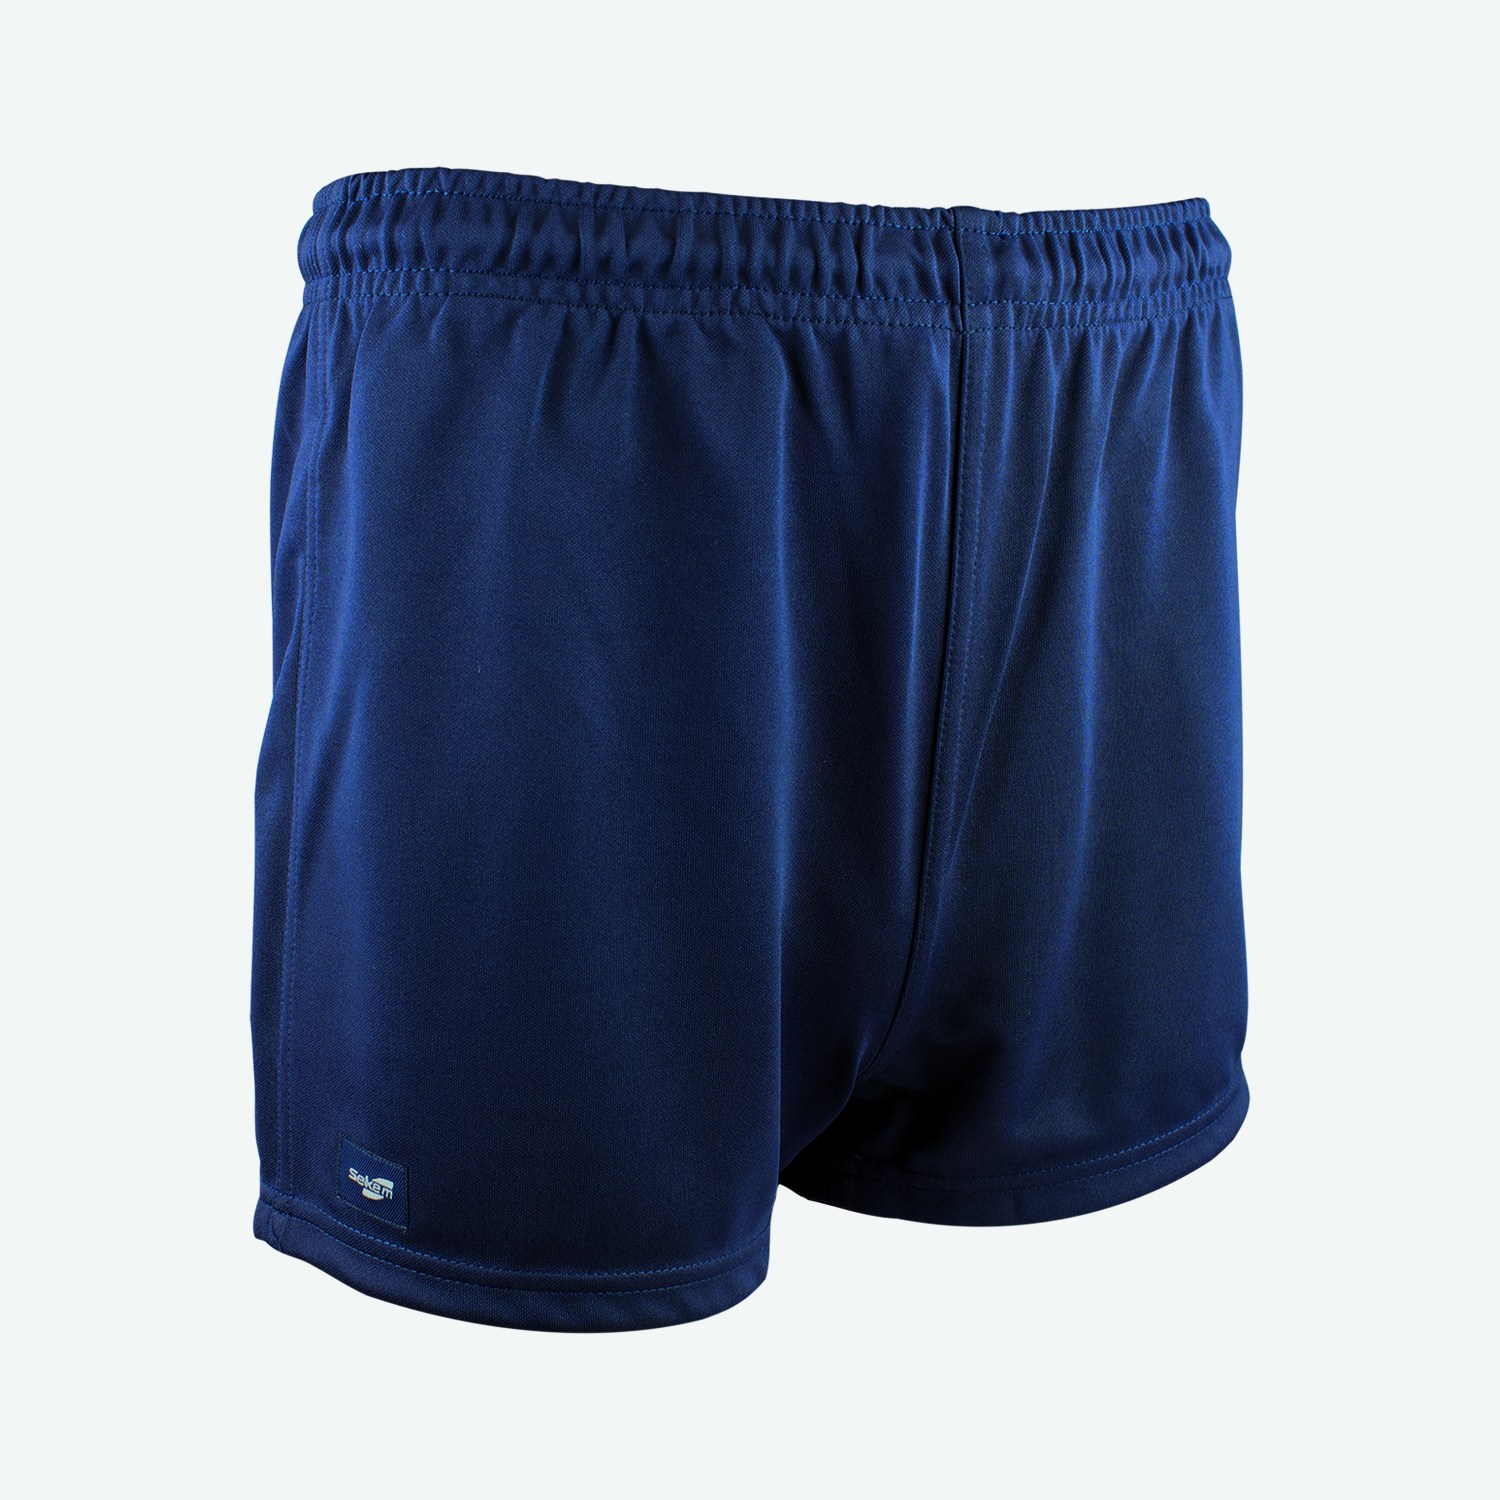 Sekem Adult Football Shorts